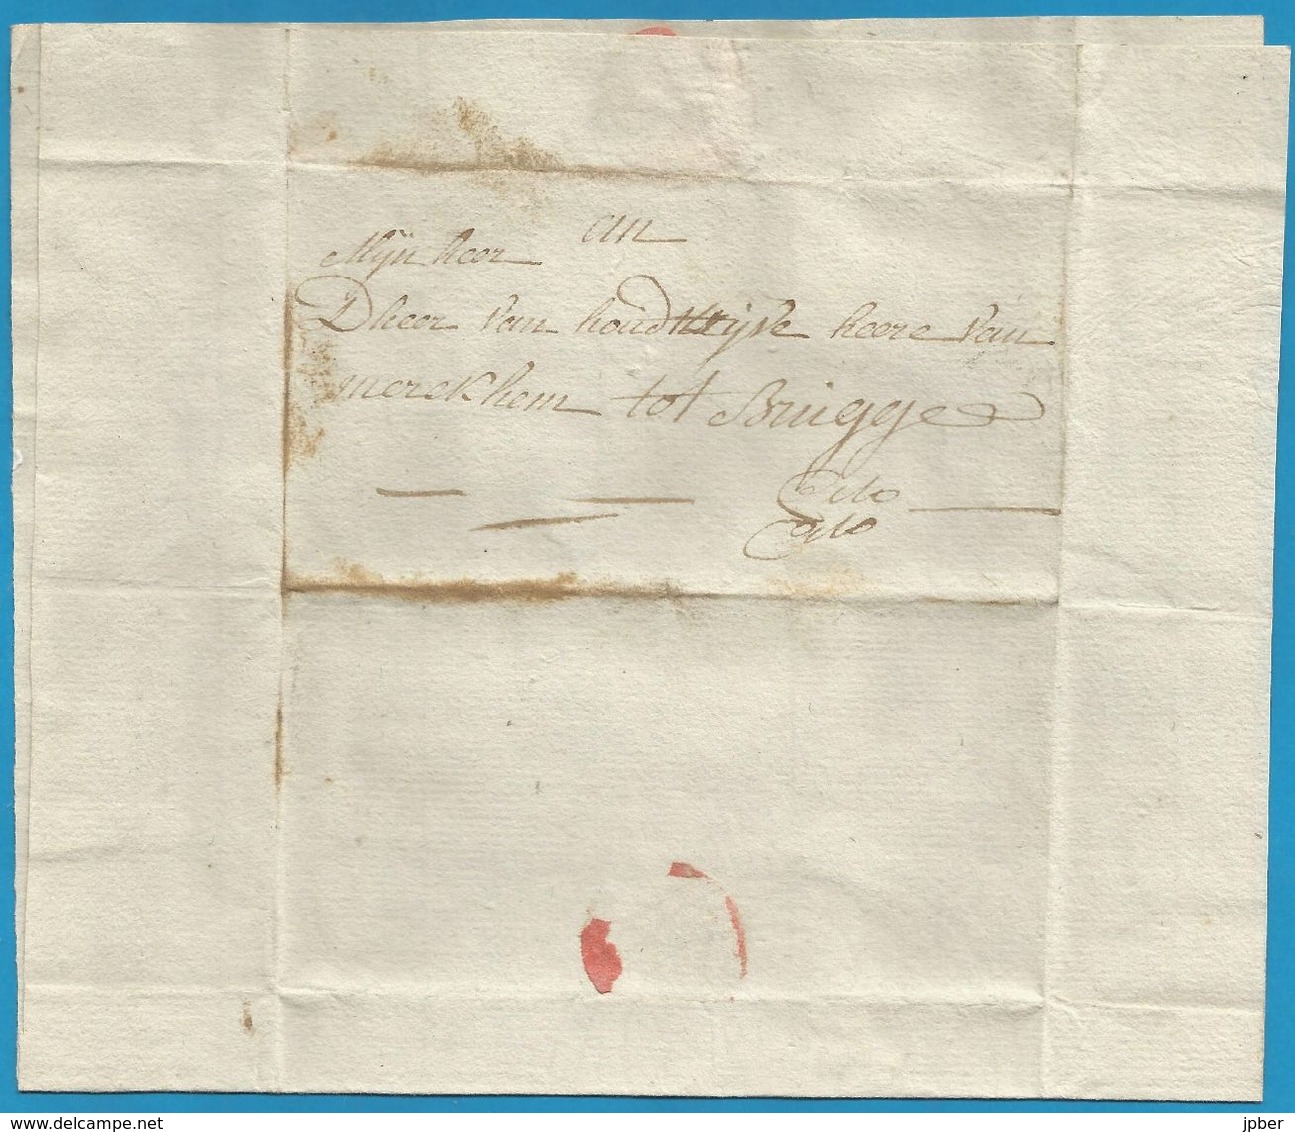 (T-001) Belgique - Précurseur - LAC Du 22/12/1802 De NieuwenDamme à Brugge - Contenu "...de Heer Beghin ... Dixmuide..." - 1794-1814 (Französische Besatzung)